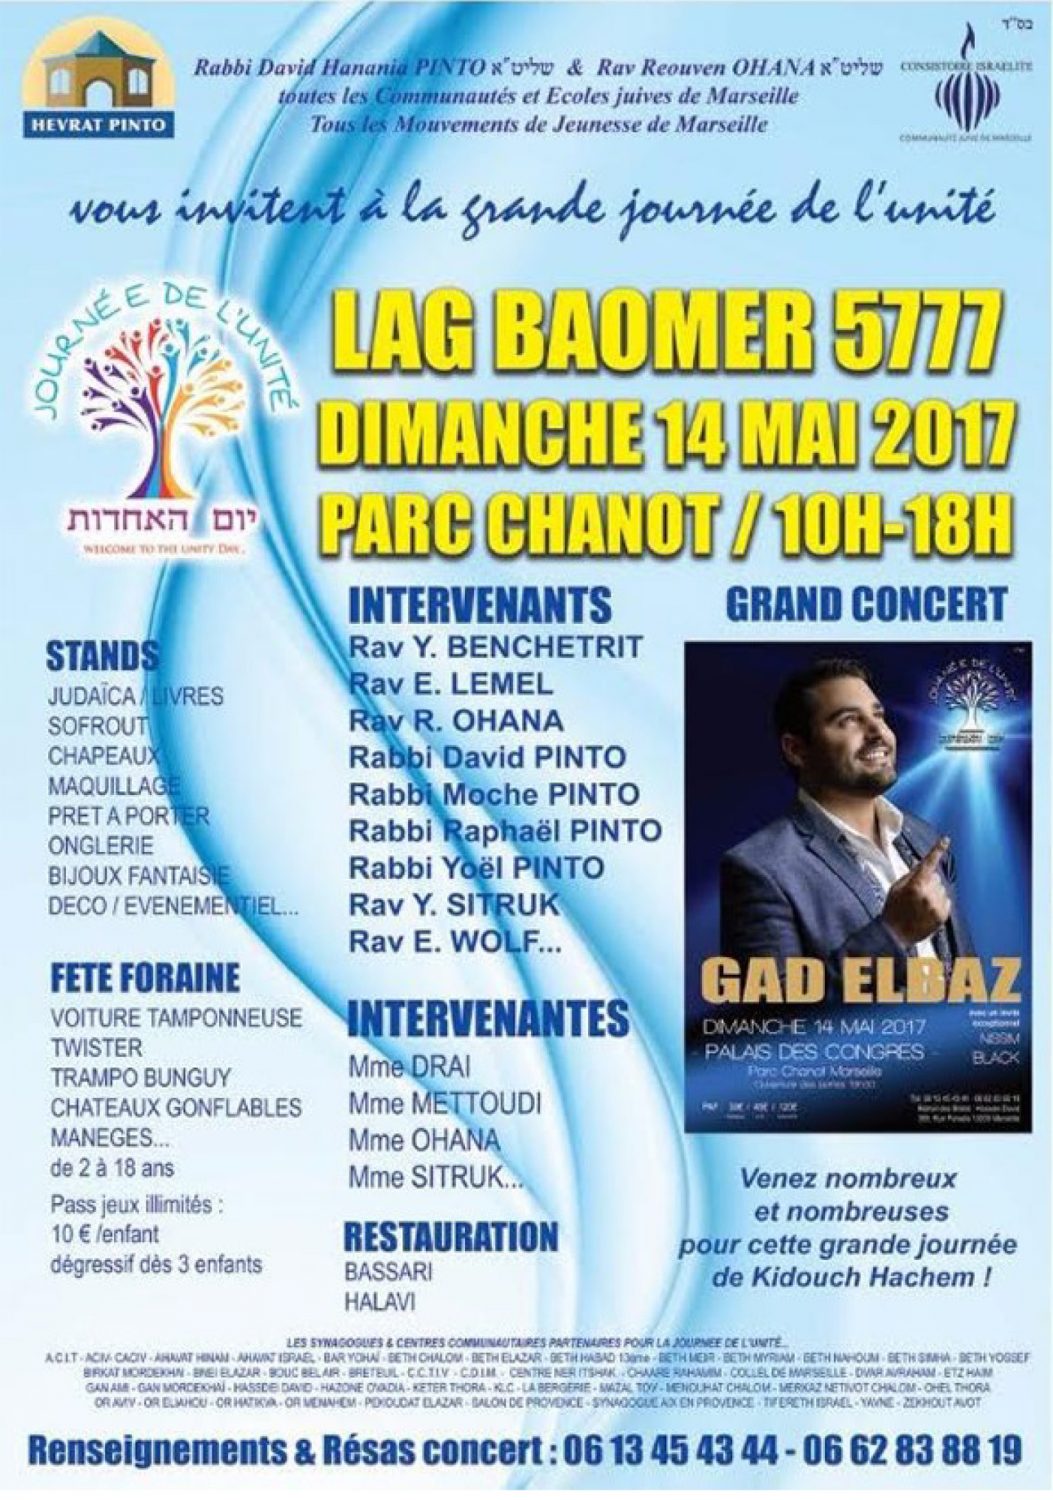 Lag baomer, Marseille, 14 mai 2017